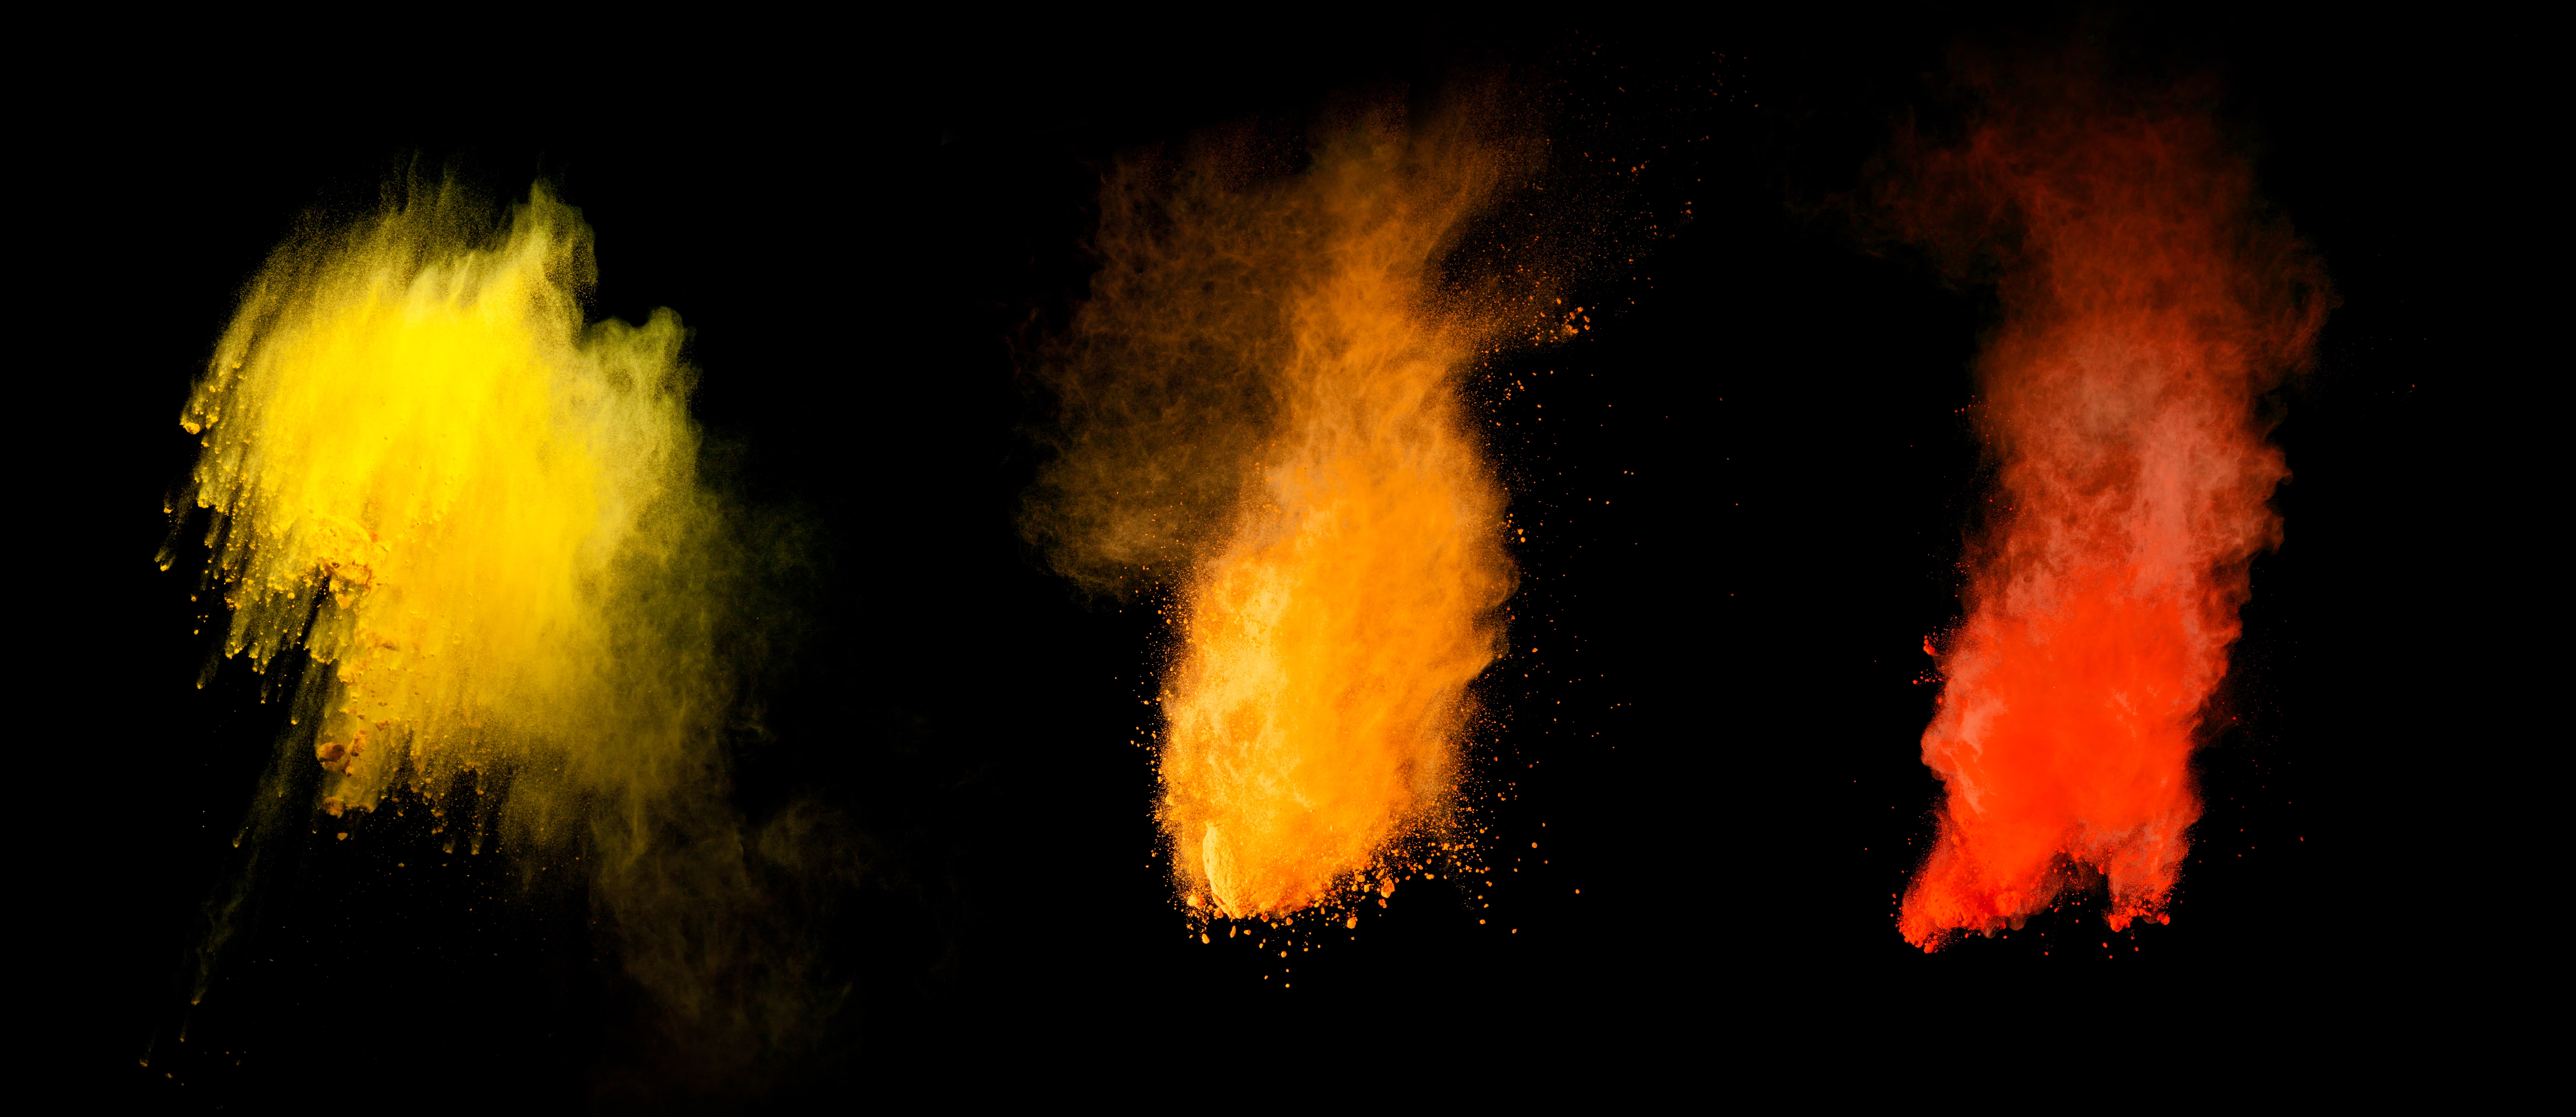 powder explosion, burning, exploding, orange color, motion